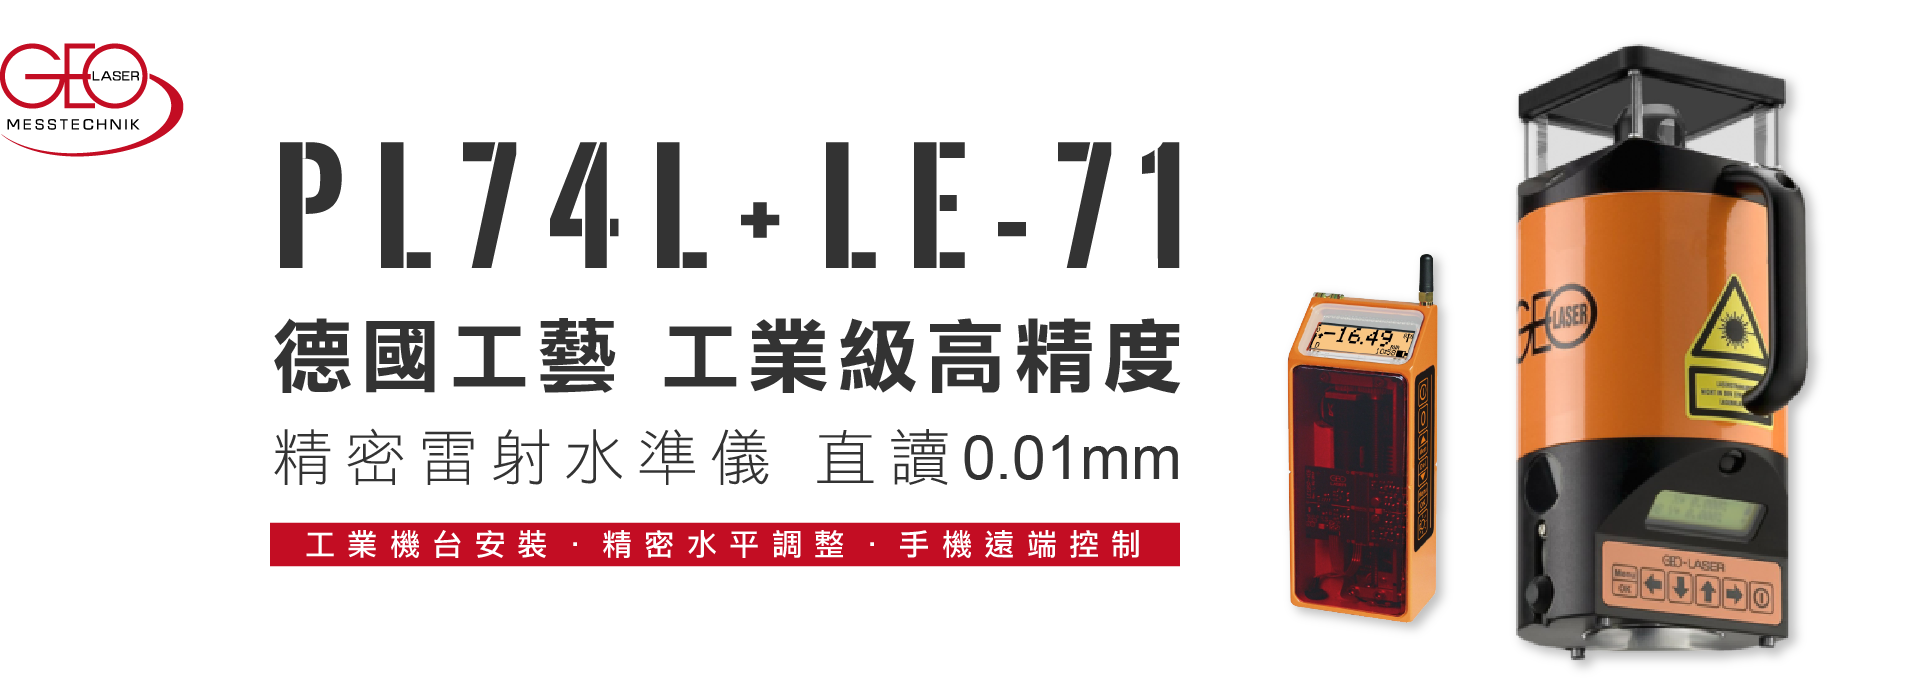 GEO Laser PL-74L